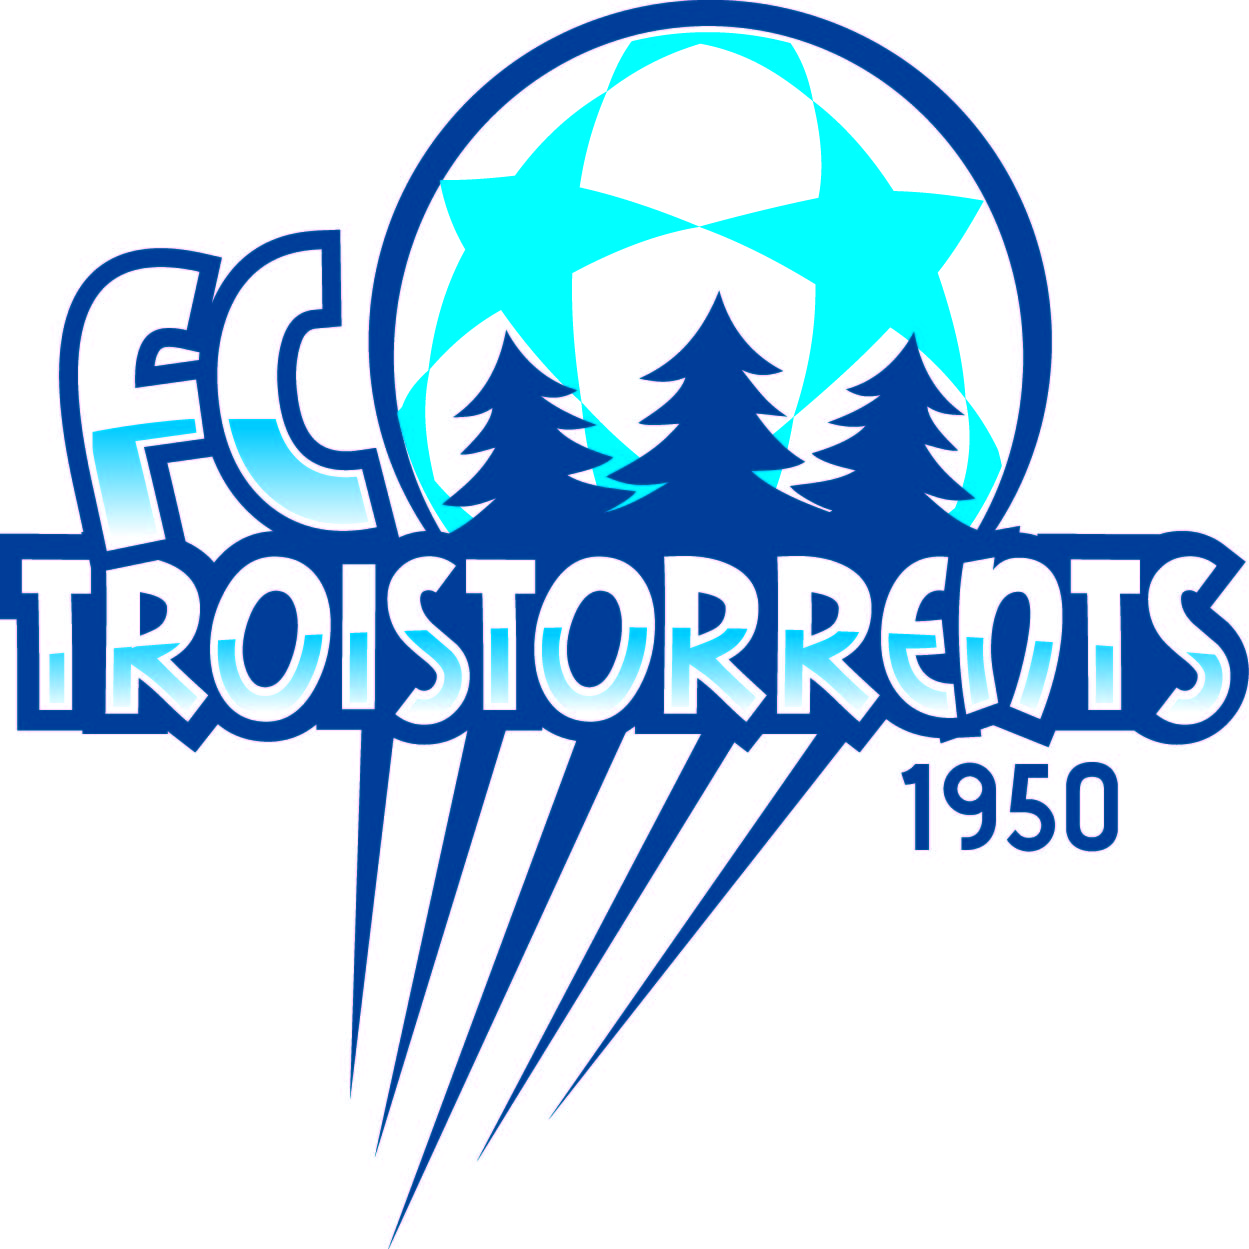 FC Troistorrents Logo